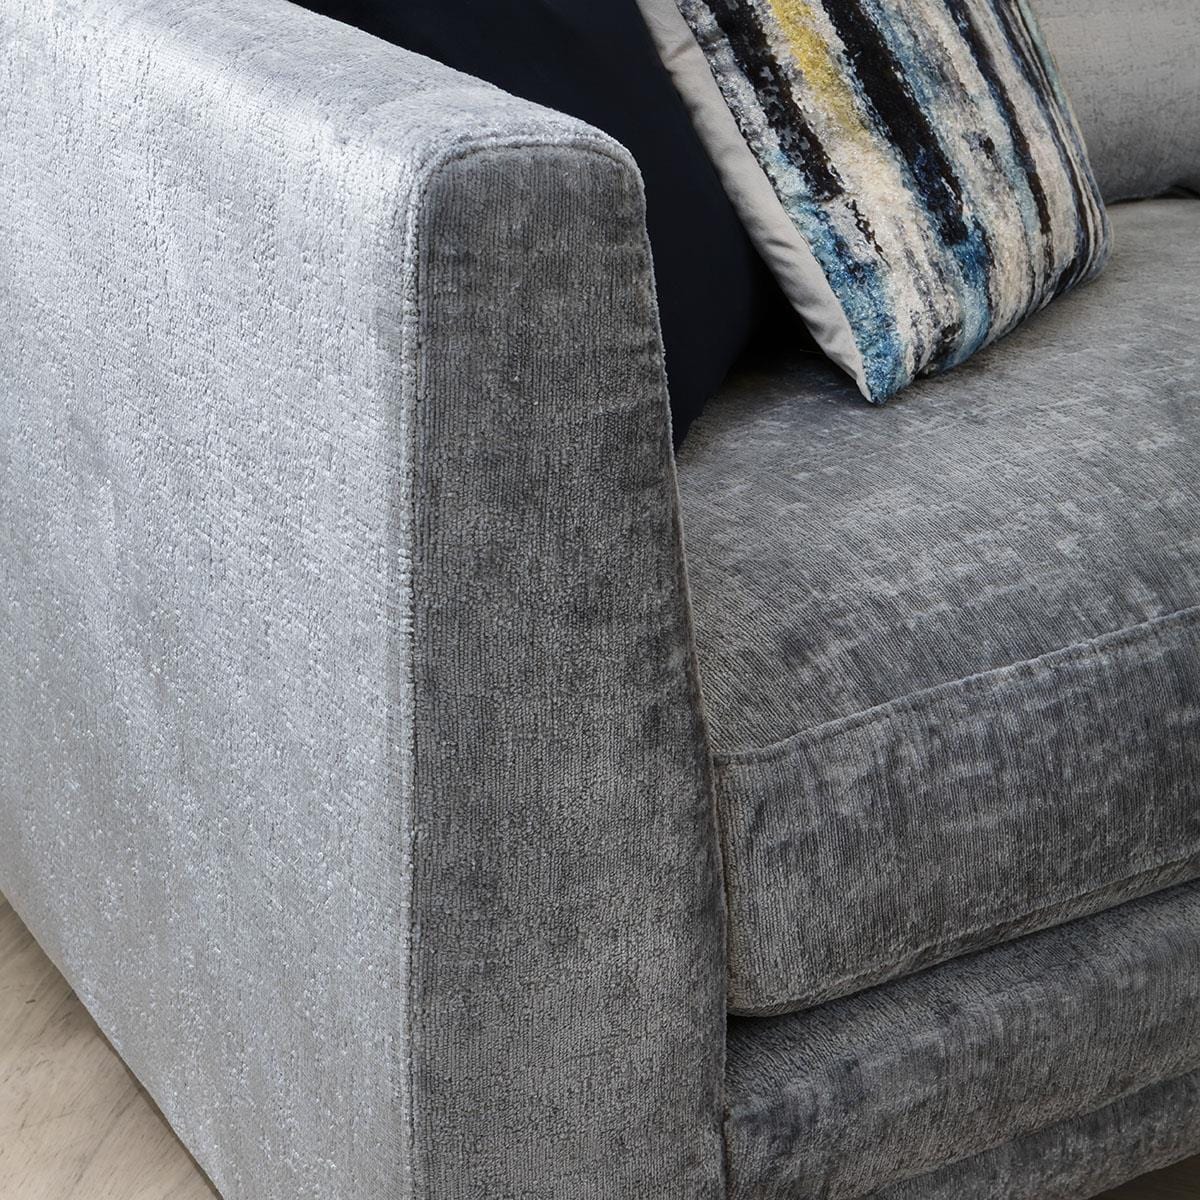 Quatropi Modern 3 Seater Sofa - Premium Fabric Upholstery - Choose Your Fabric - 215cm